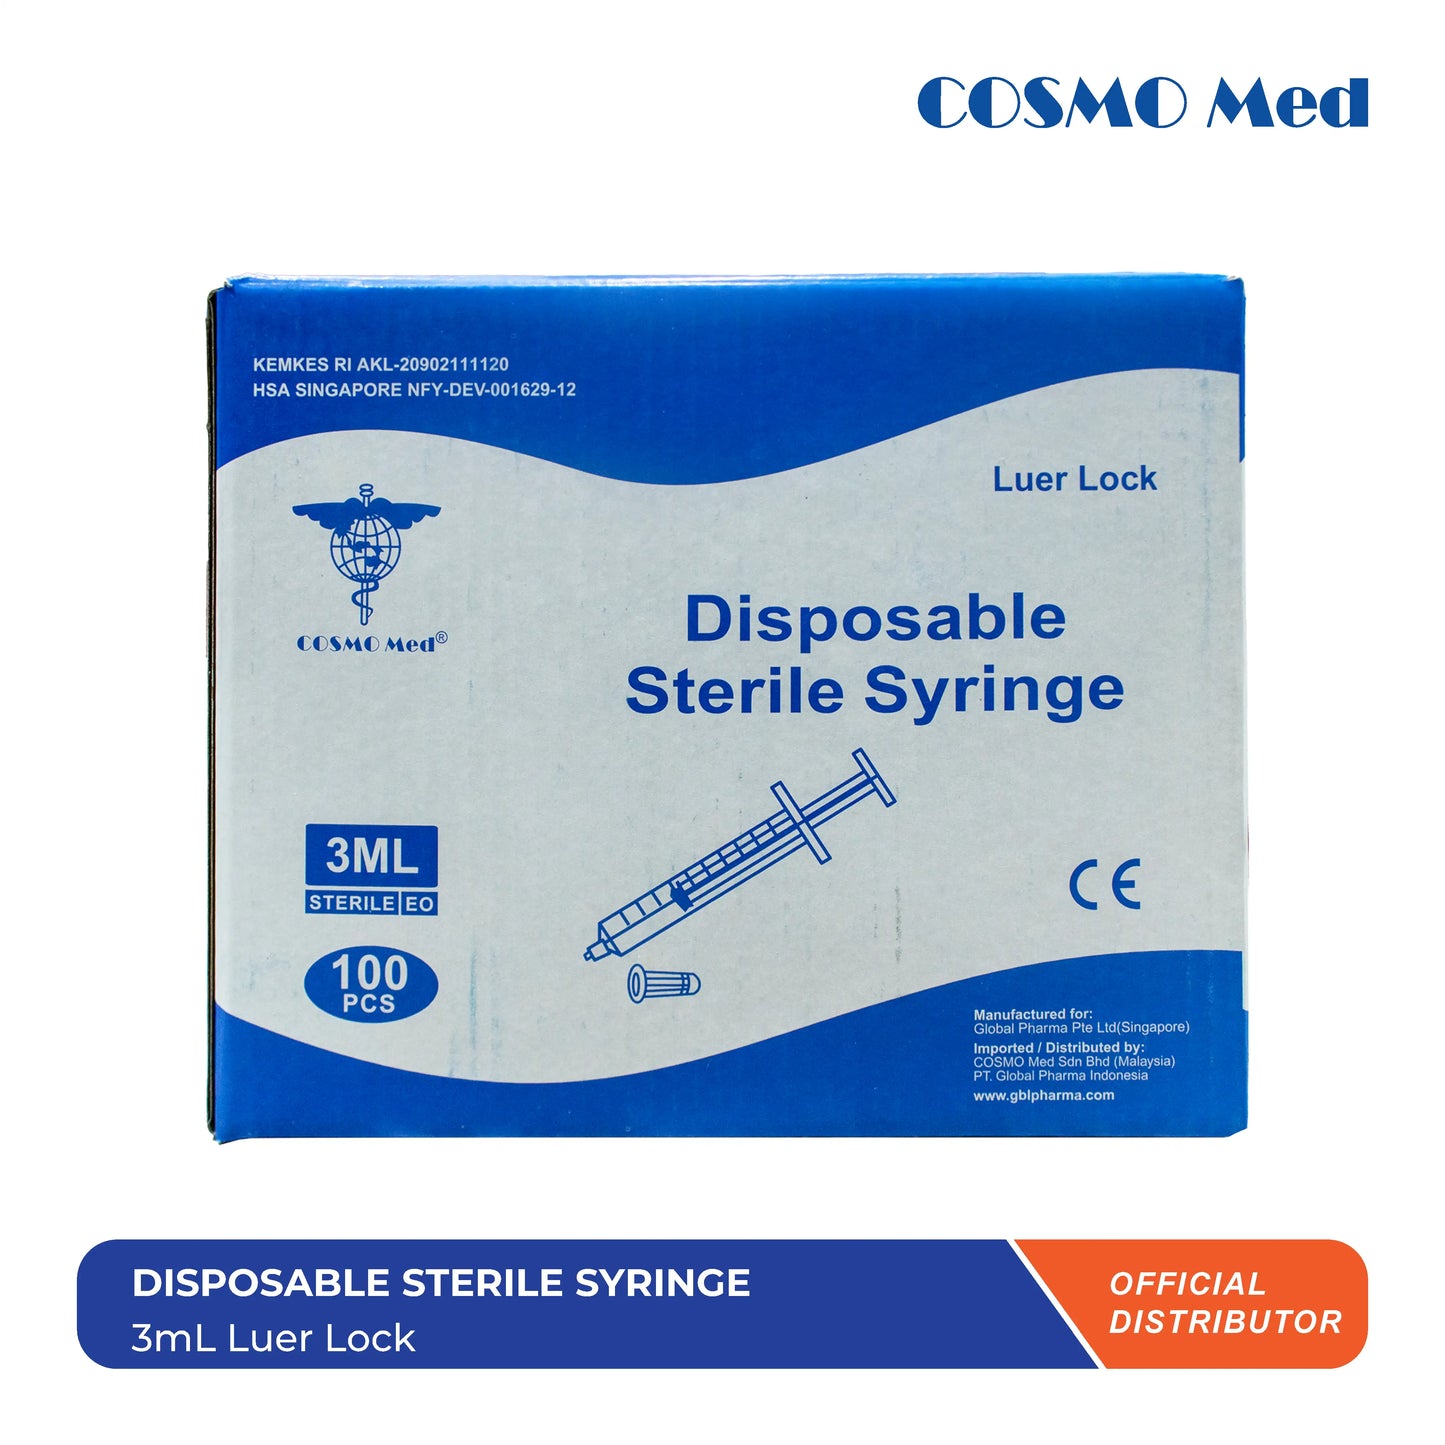 Disposable Sterile Syringe Luer Lock